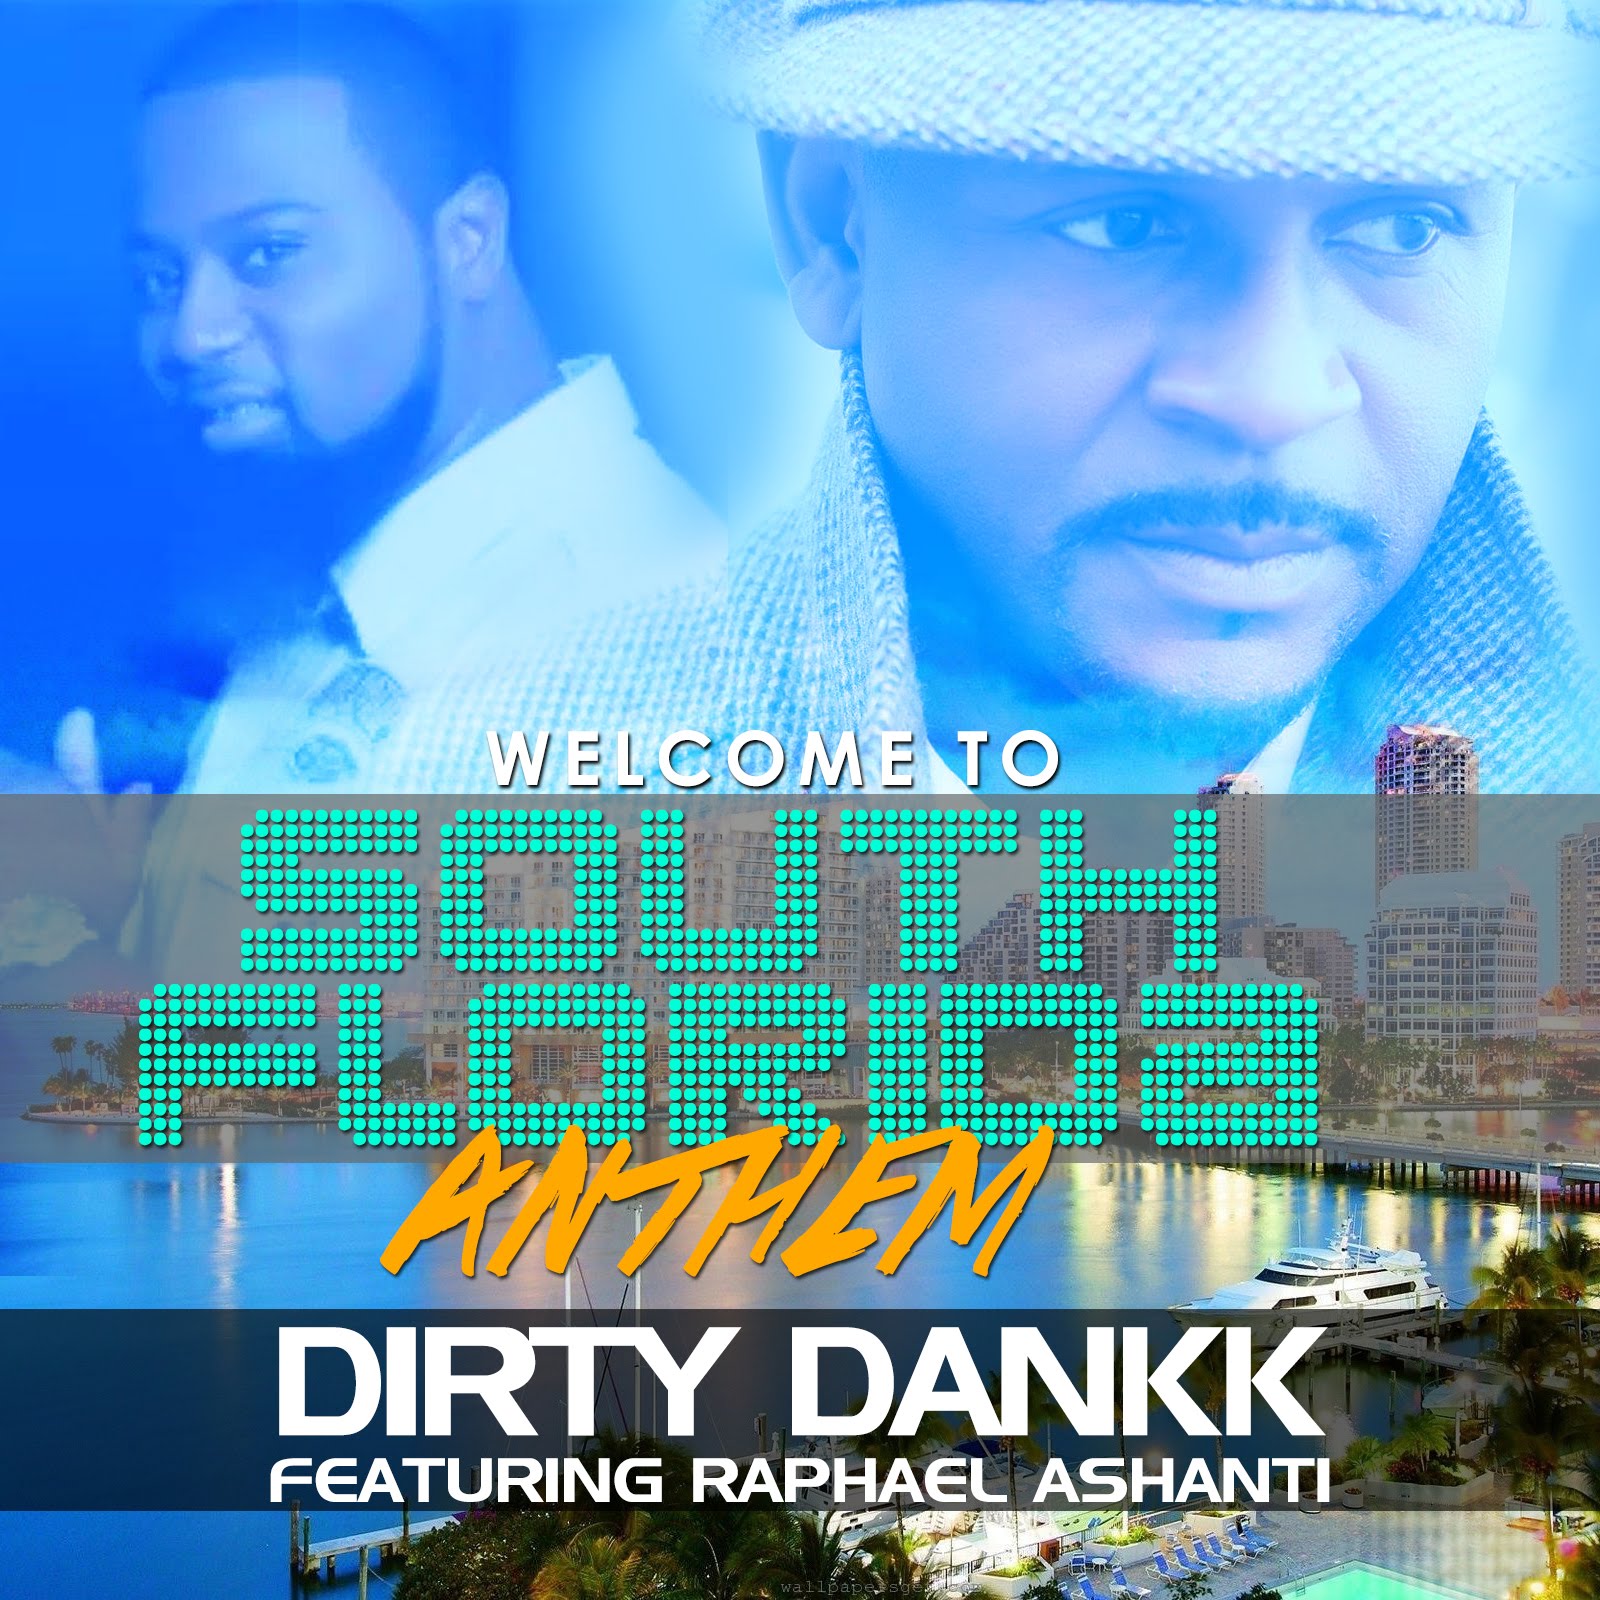 Watch New Dirty Dankk Video!